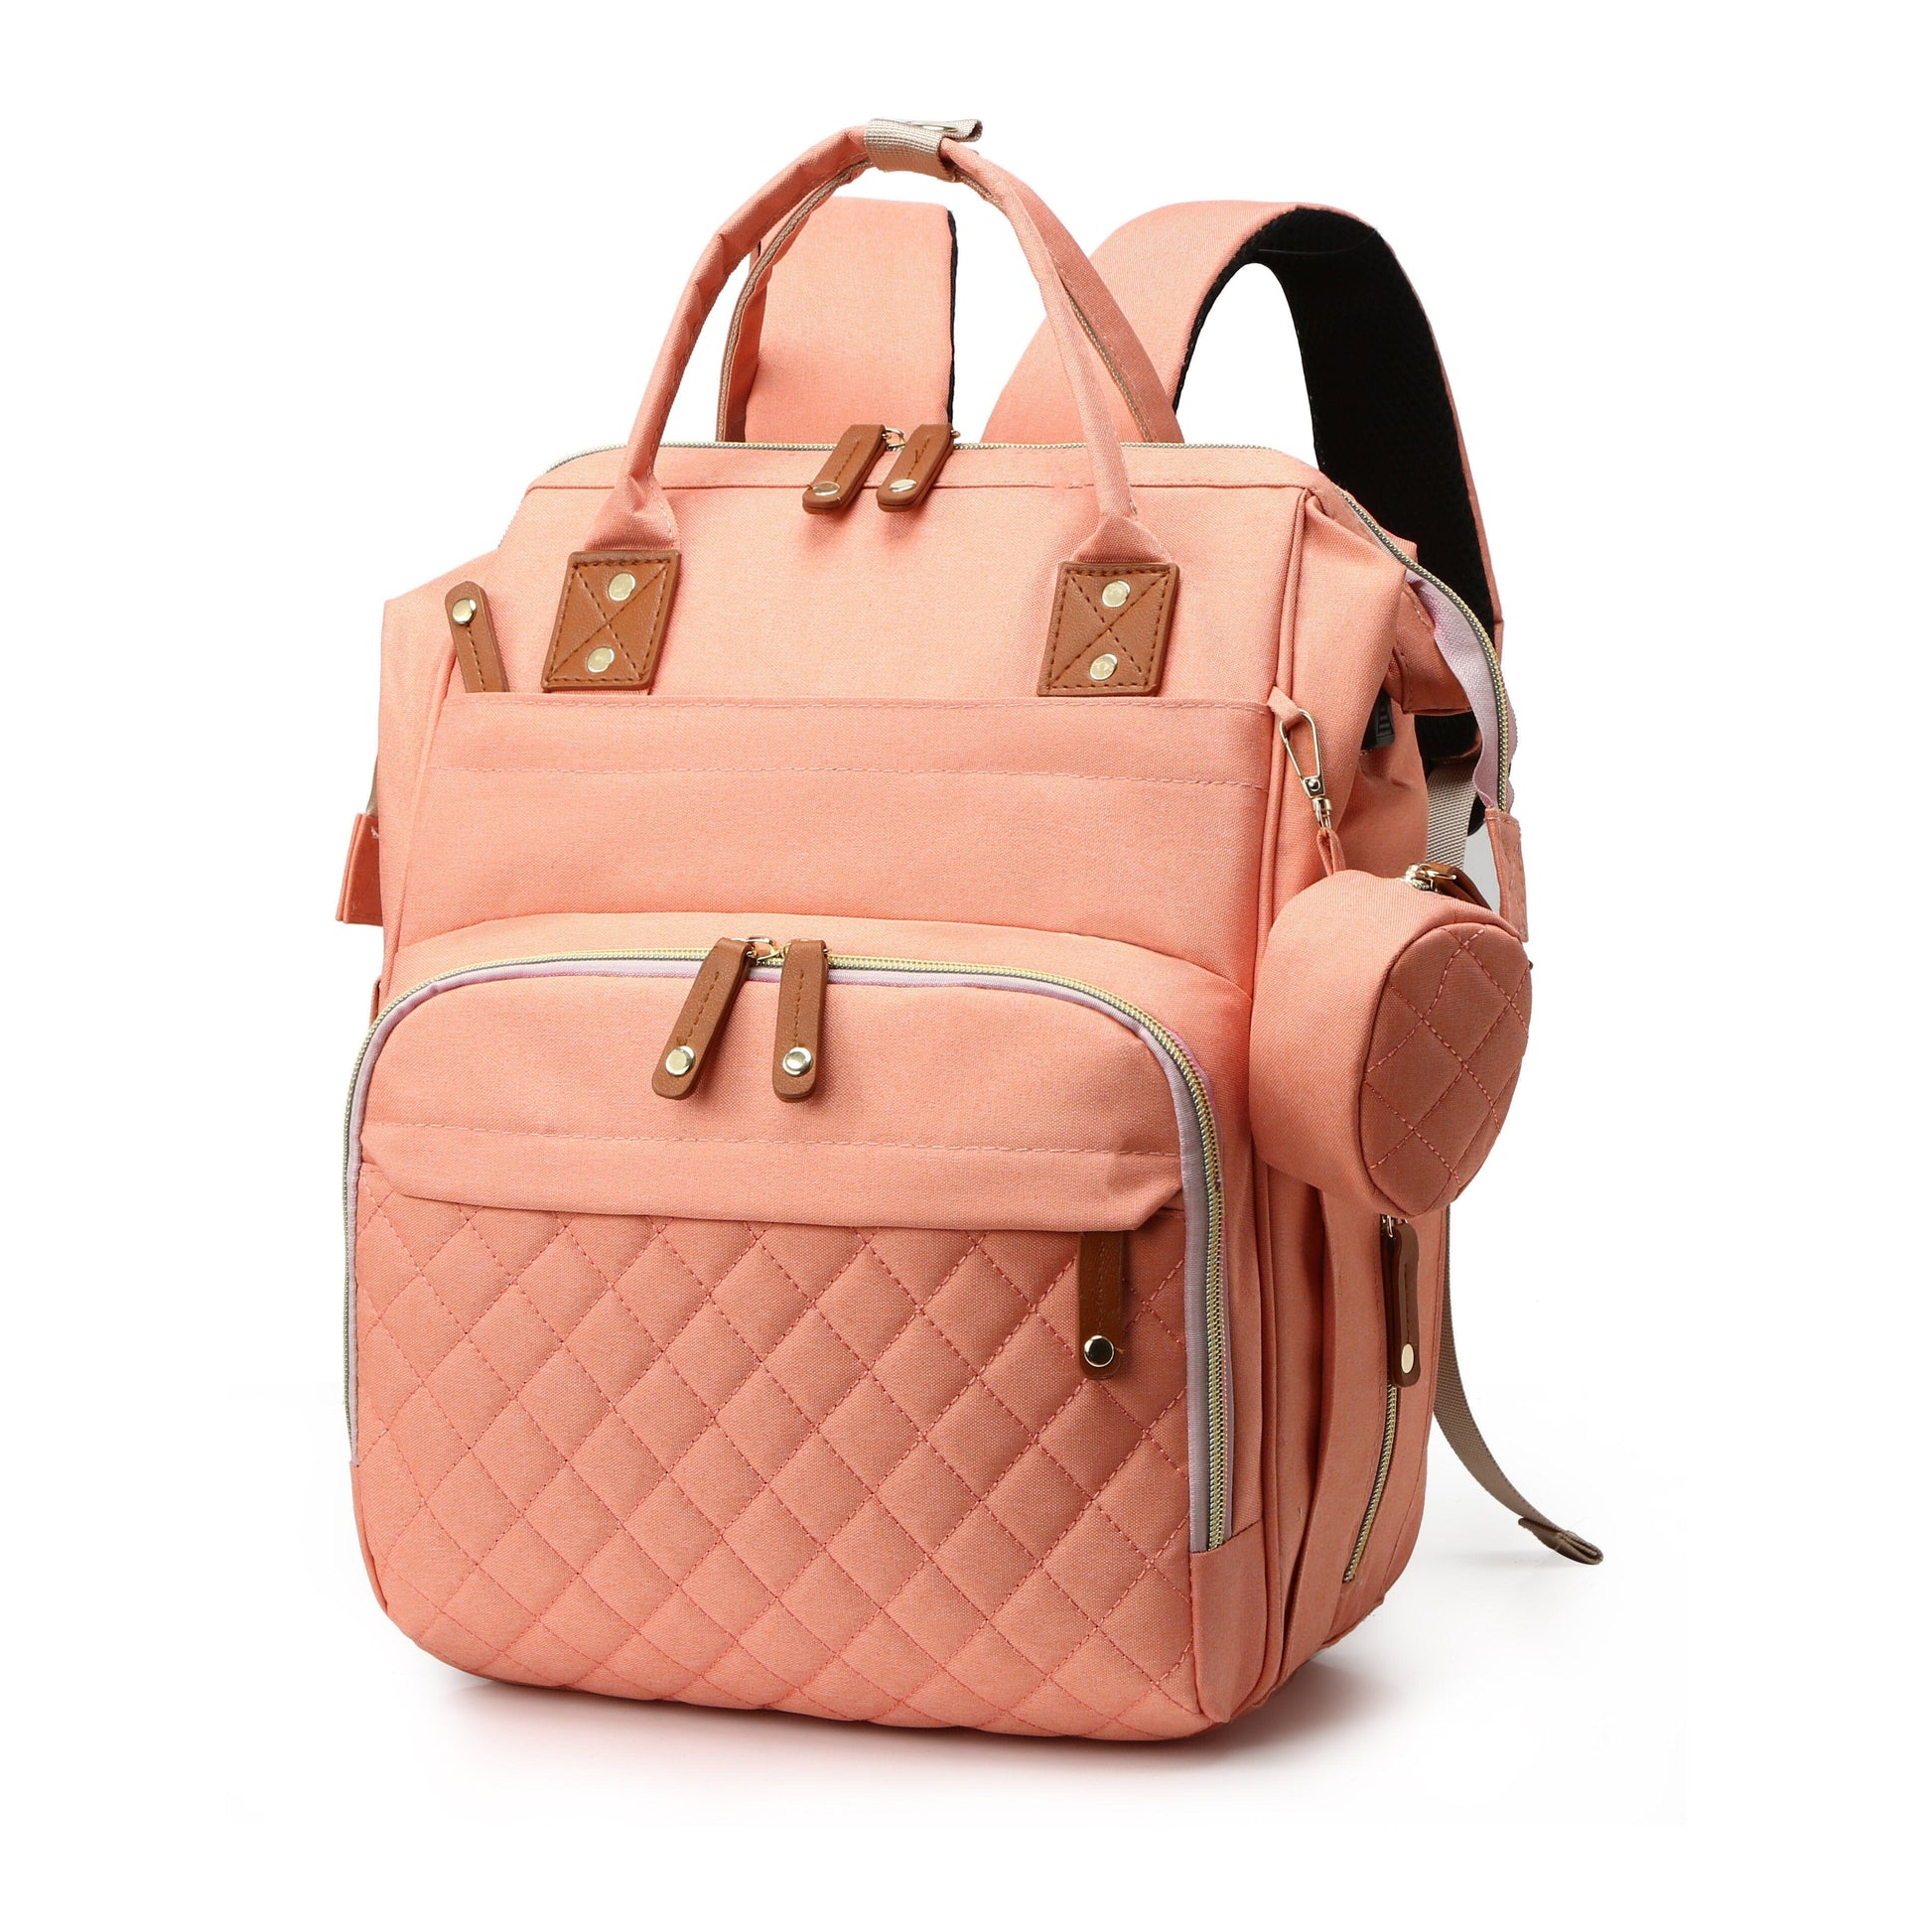 Gender Neutral Backpack Diaper Bag The Store Bags Pink 